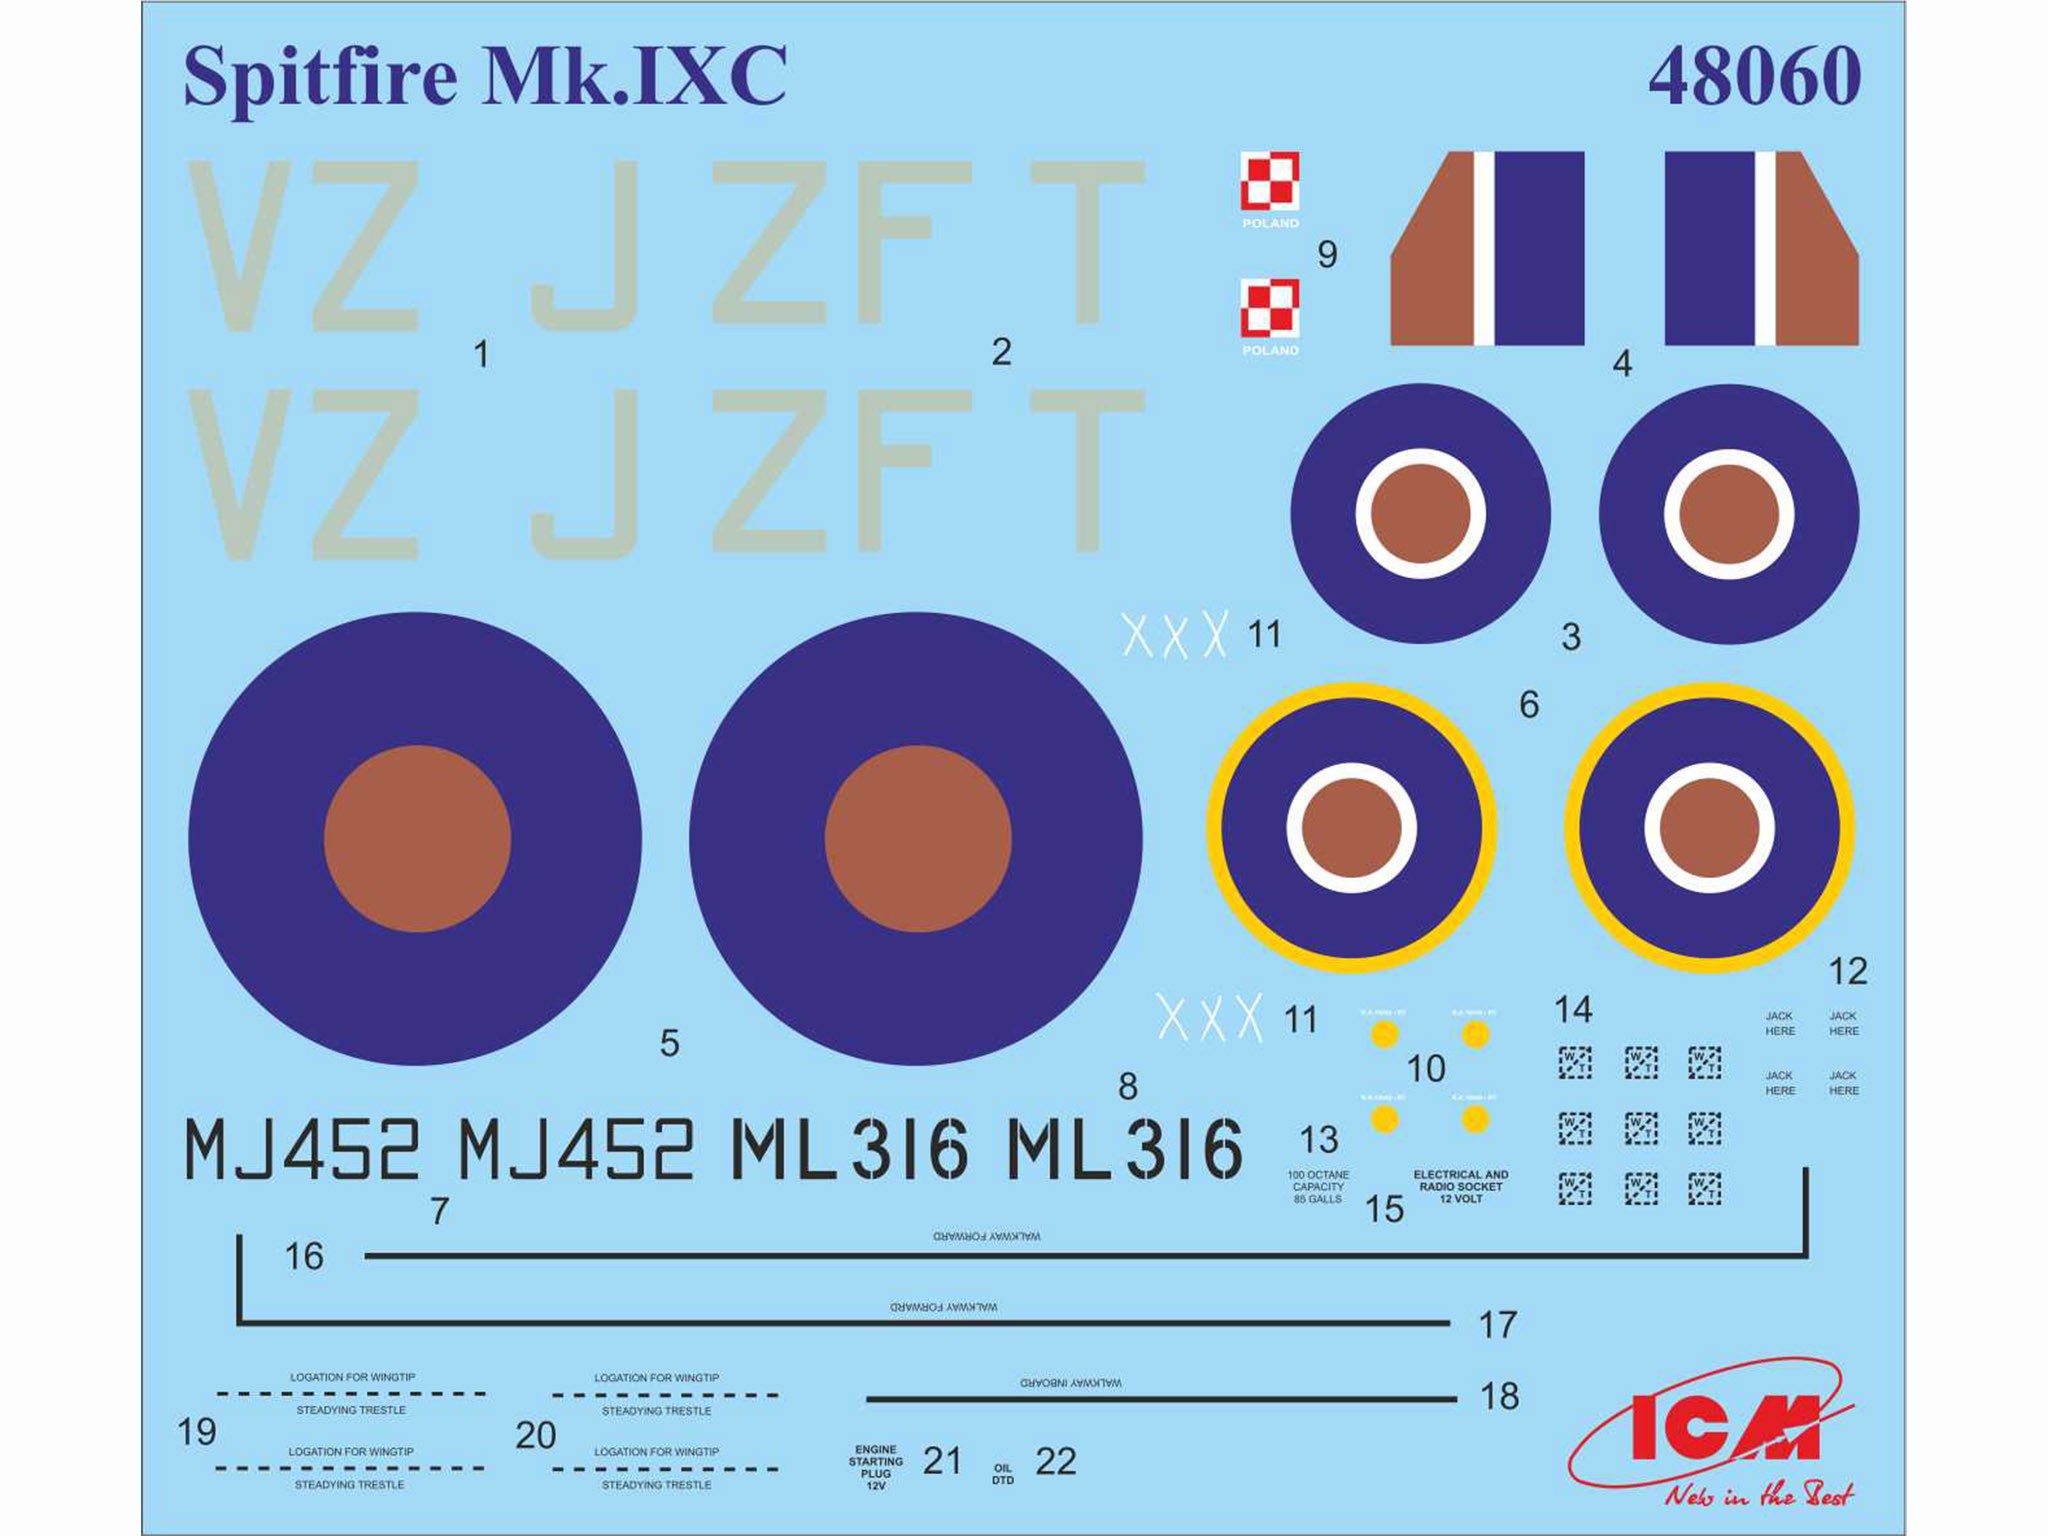 ICM 48060 1/48 Spitfire Mk.IXC “Beer Delivery” ASKERİ SAVAŞ UÇAĞI MAKETİ